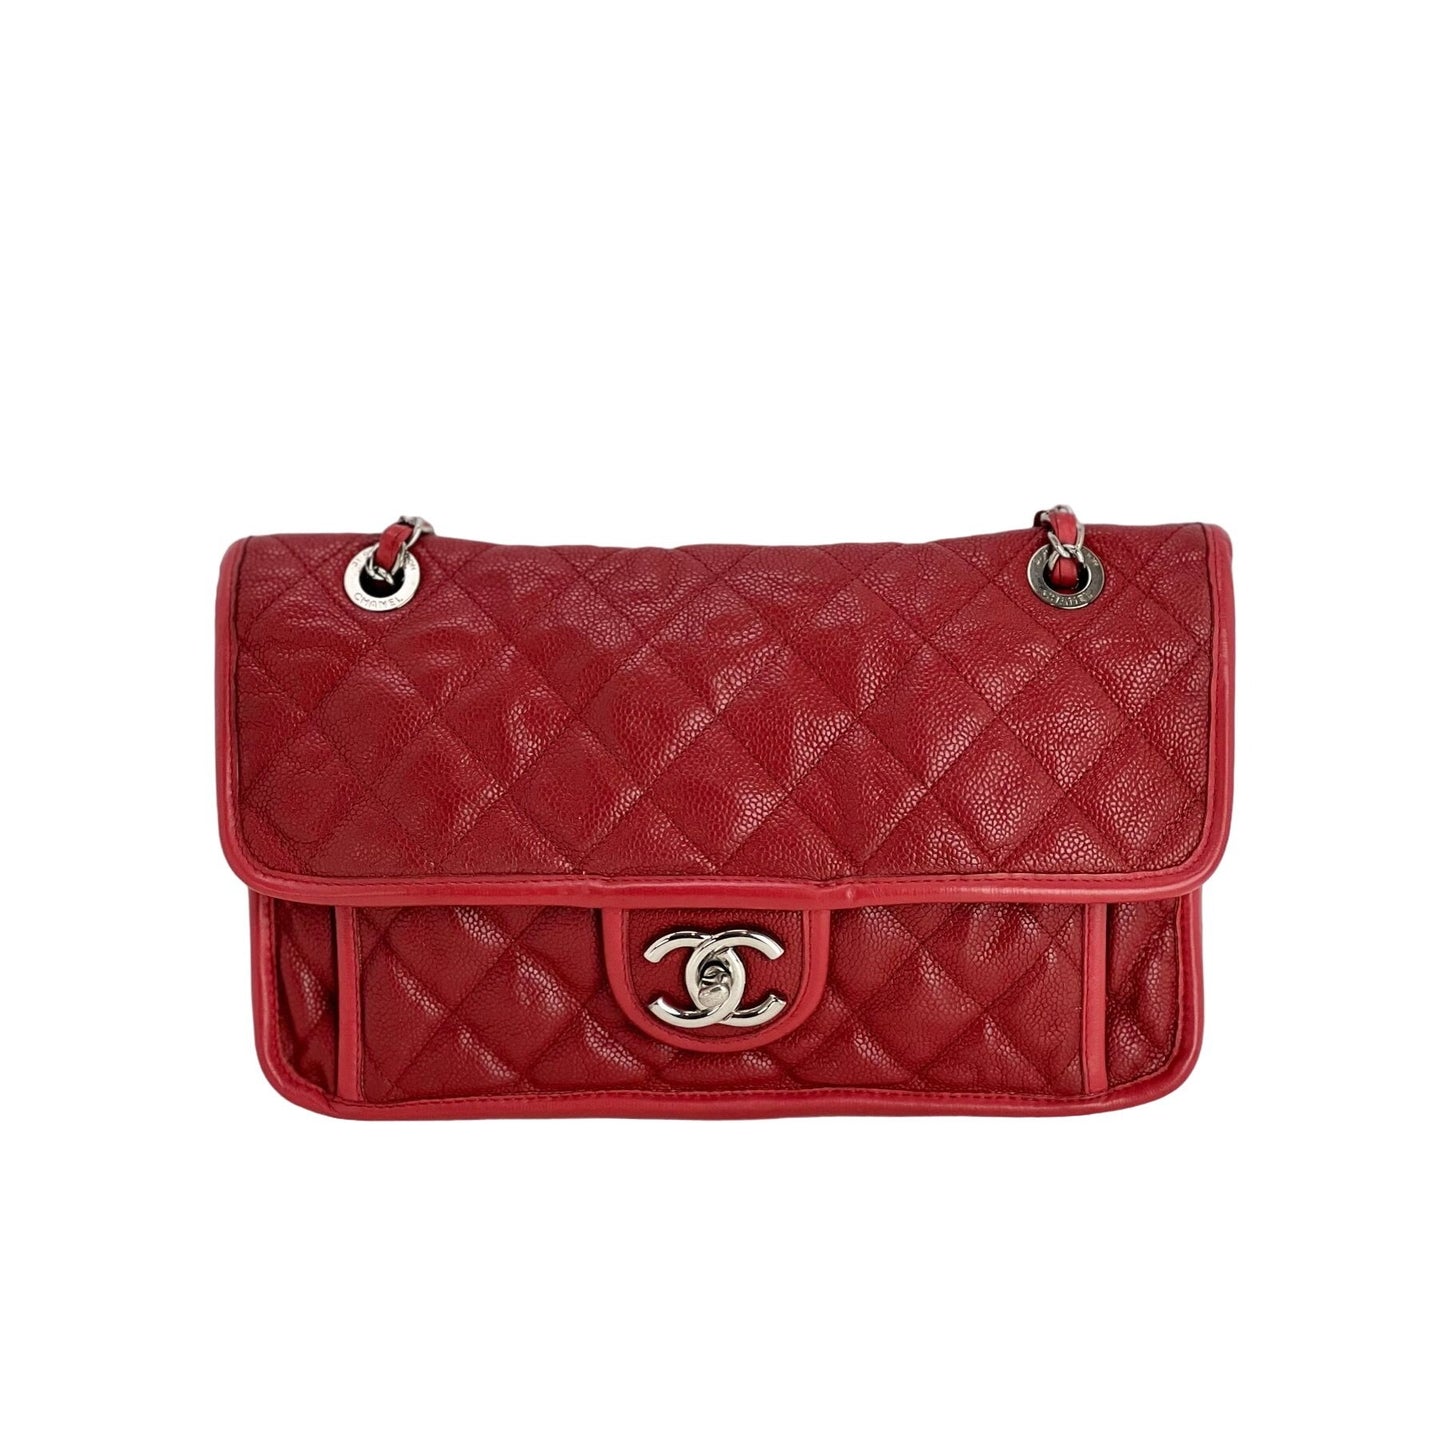 Shop Handbags - Page 2 of 5 - Luxury In Reach